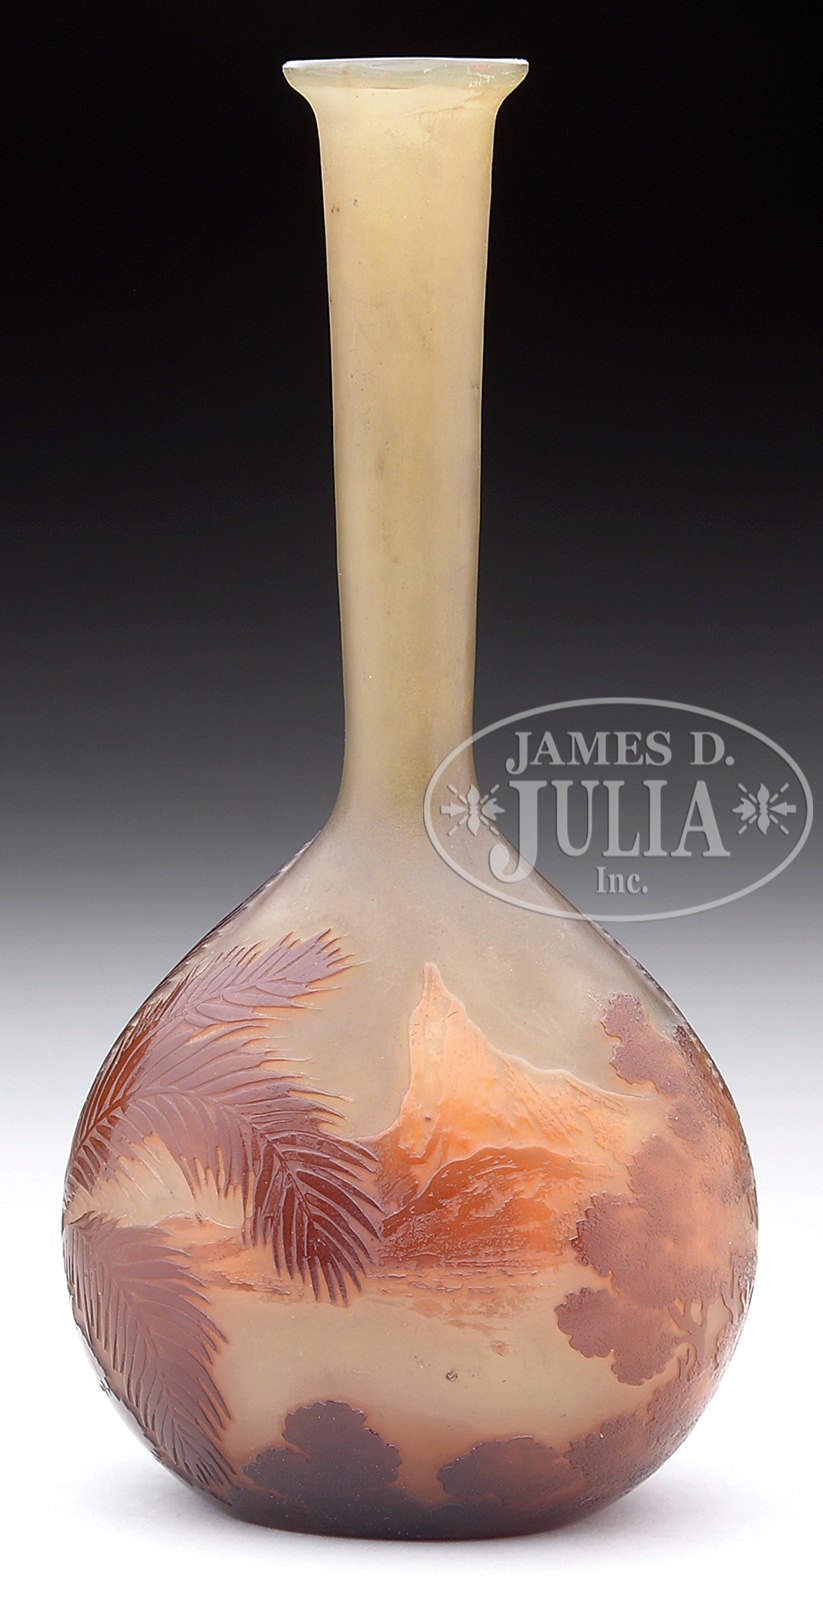 This Gallé Rio de Janeiro banjo vase was sold at Julia Auction